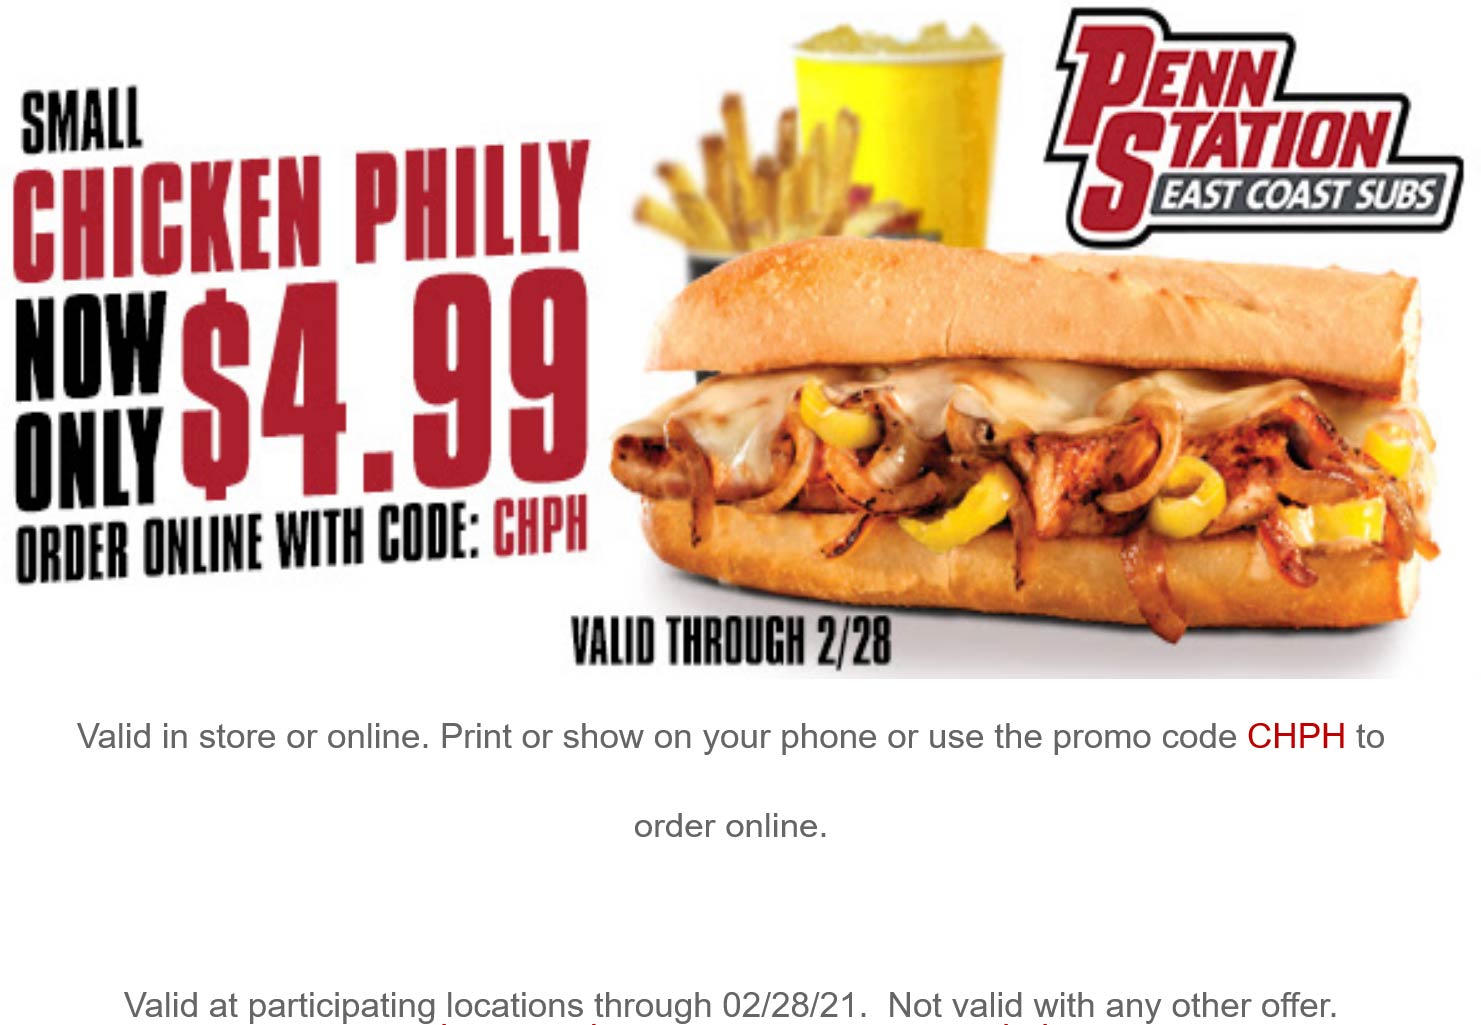 Penn Station restaurants Coupon  $5 chicken philly sub sandwich at Penn Station via promo code CHPH #pennstation 